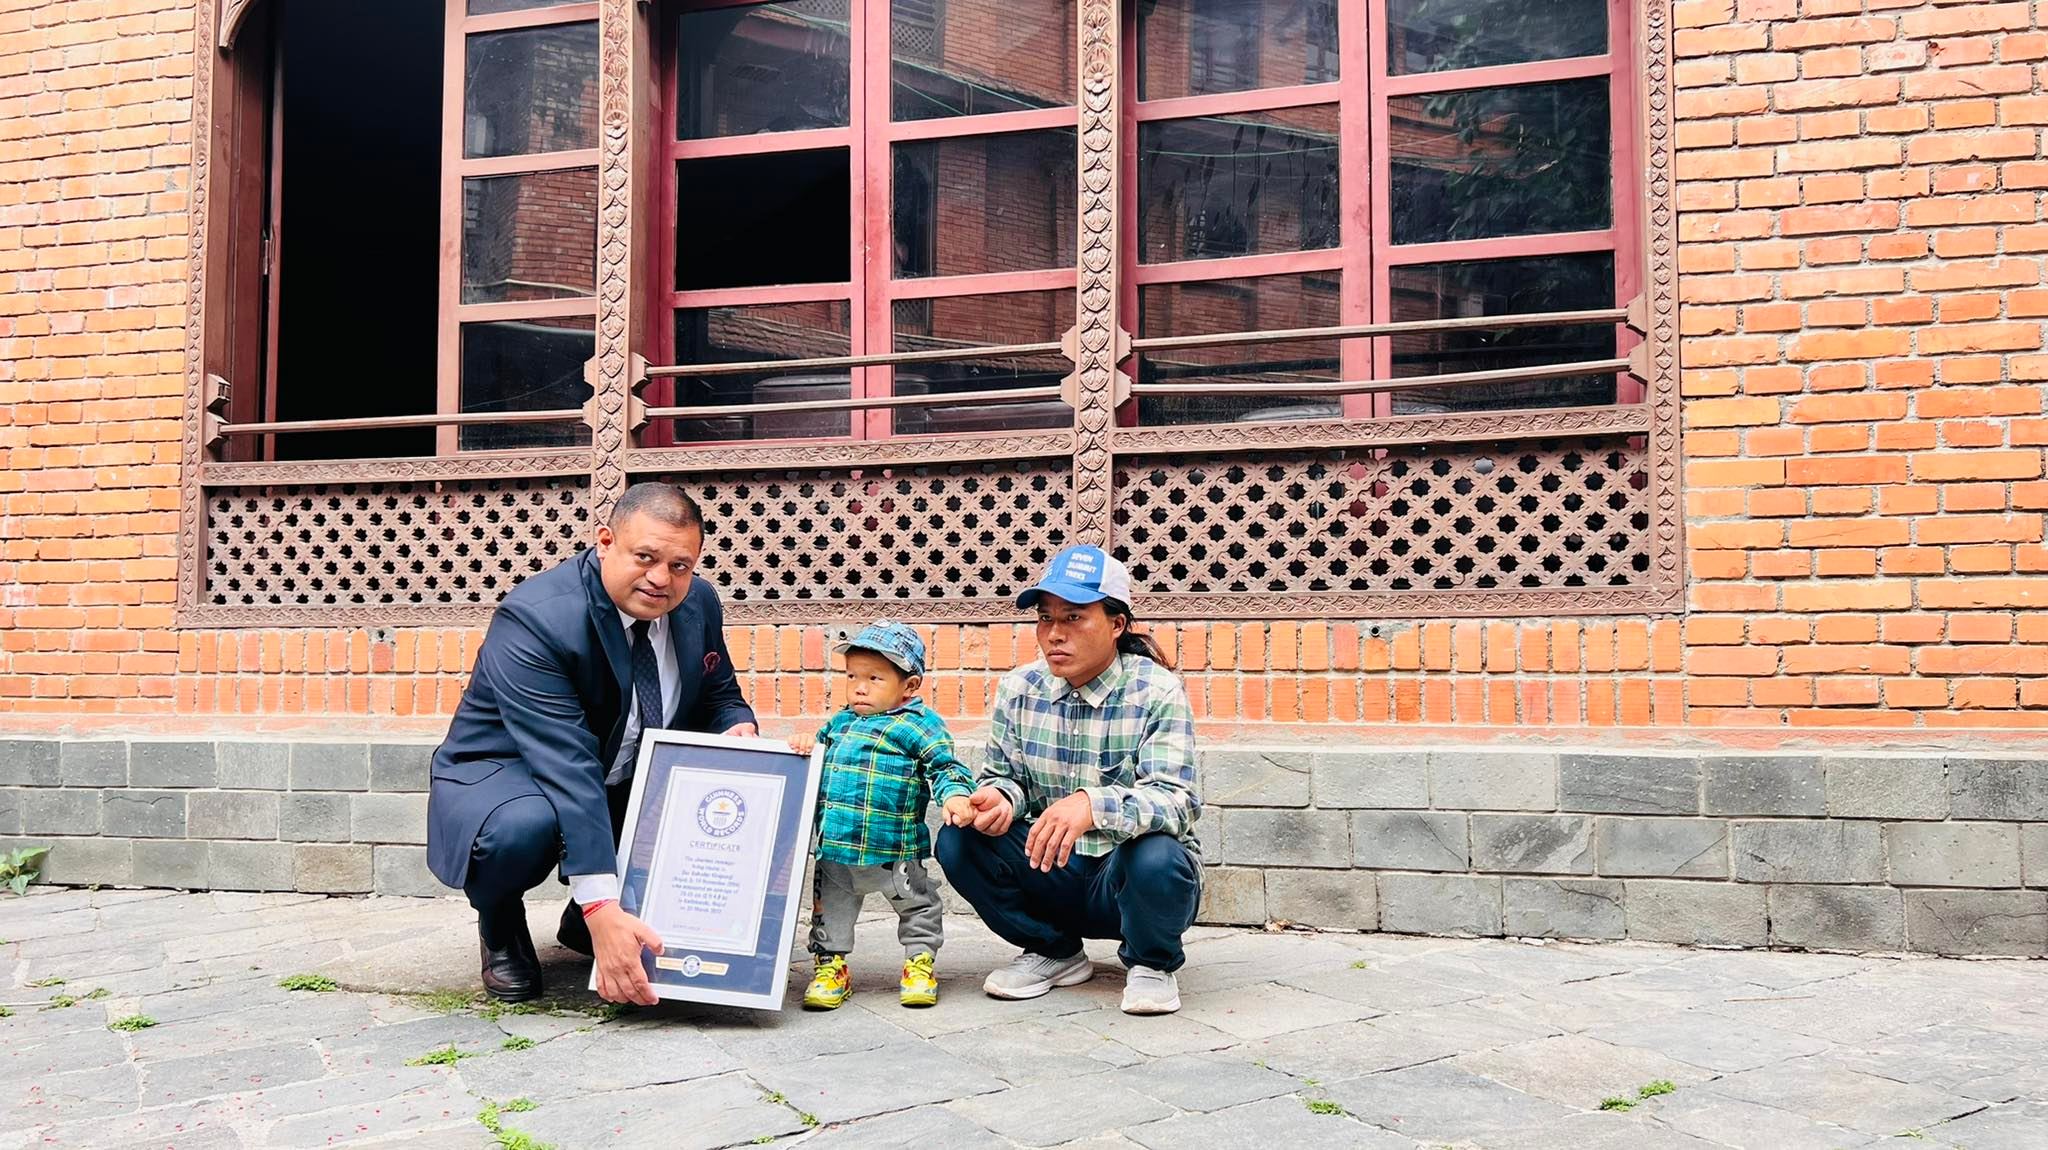 Nepal’s Khapangi sets world record as shortest teenager